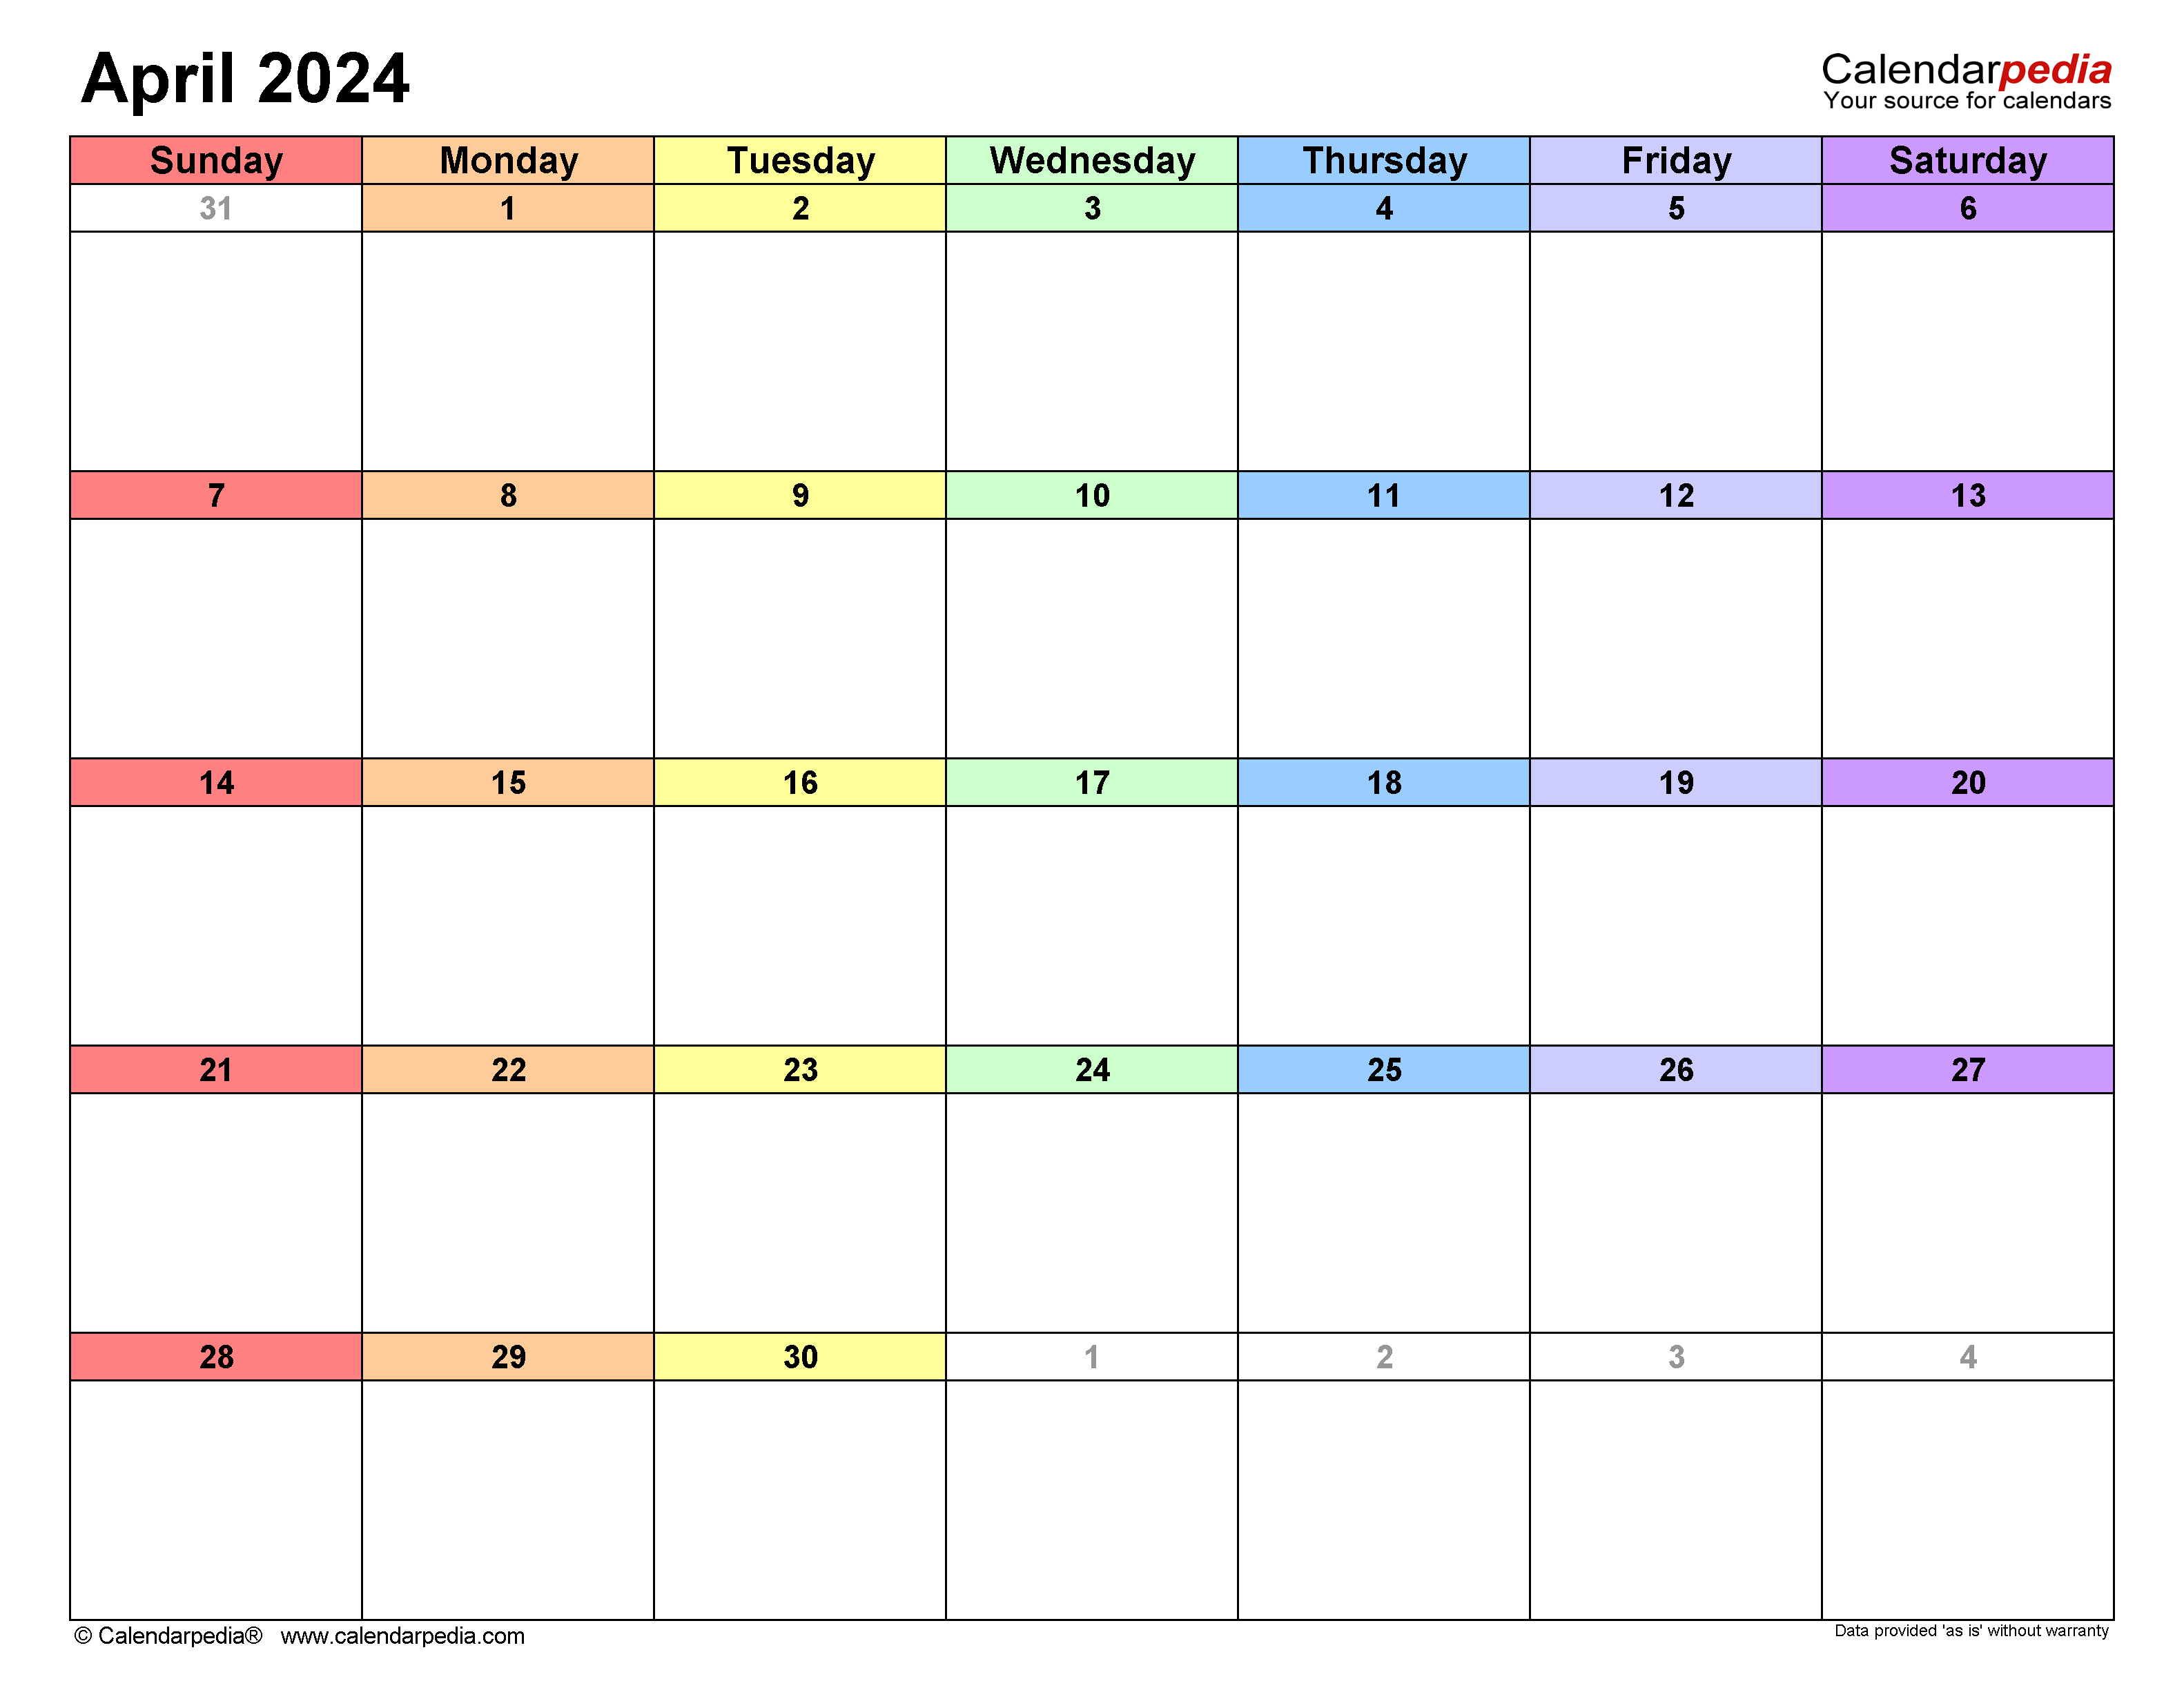 April 2024 Calendar | Templates For Word, Excel And Pdf intended for April 2024 Calendar Excel